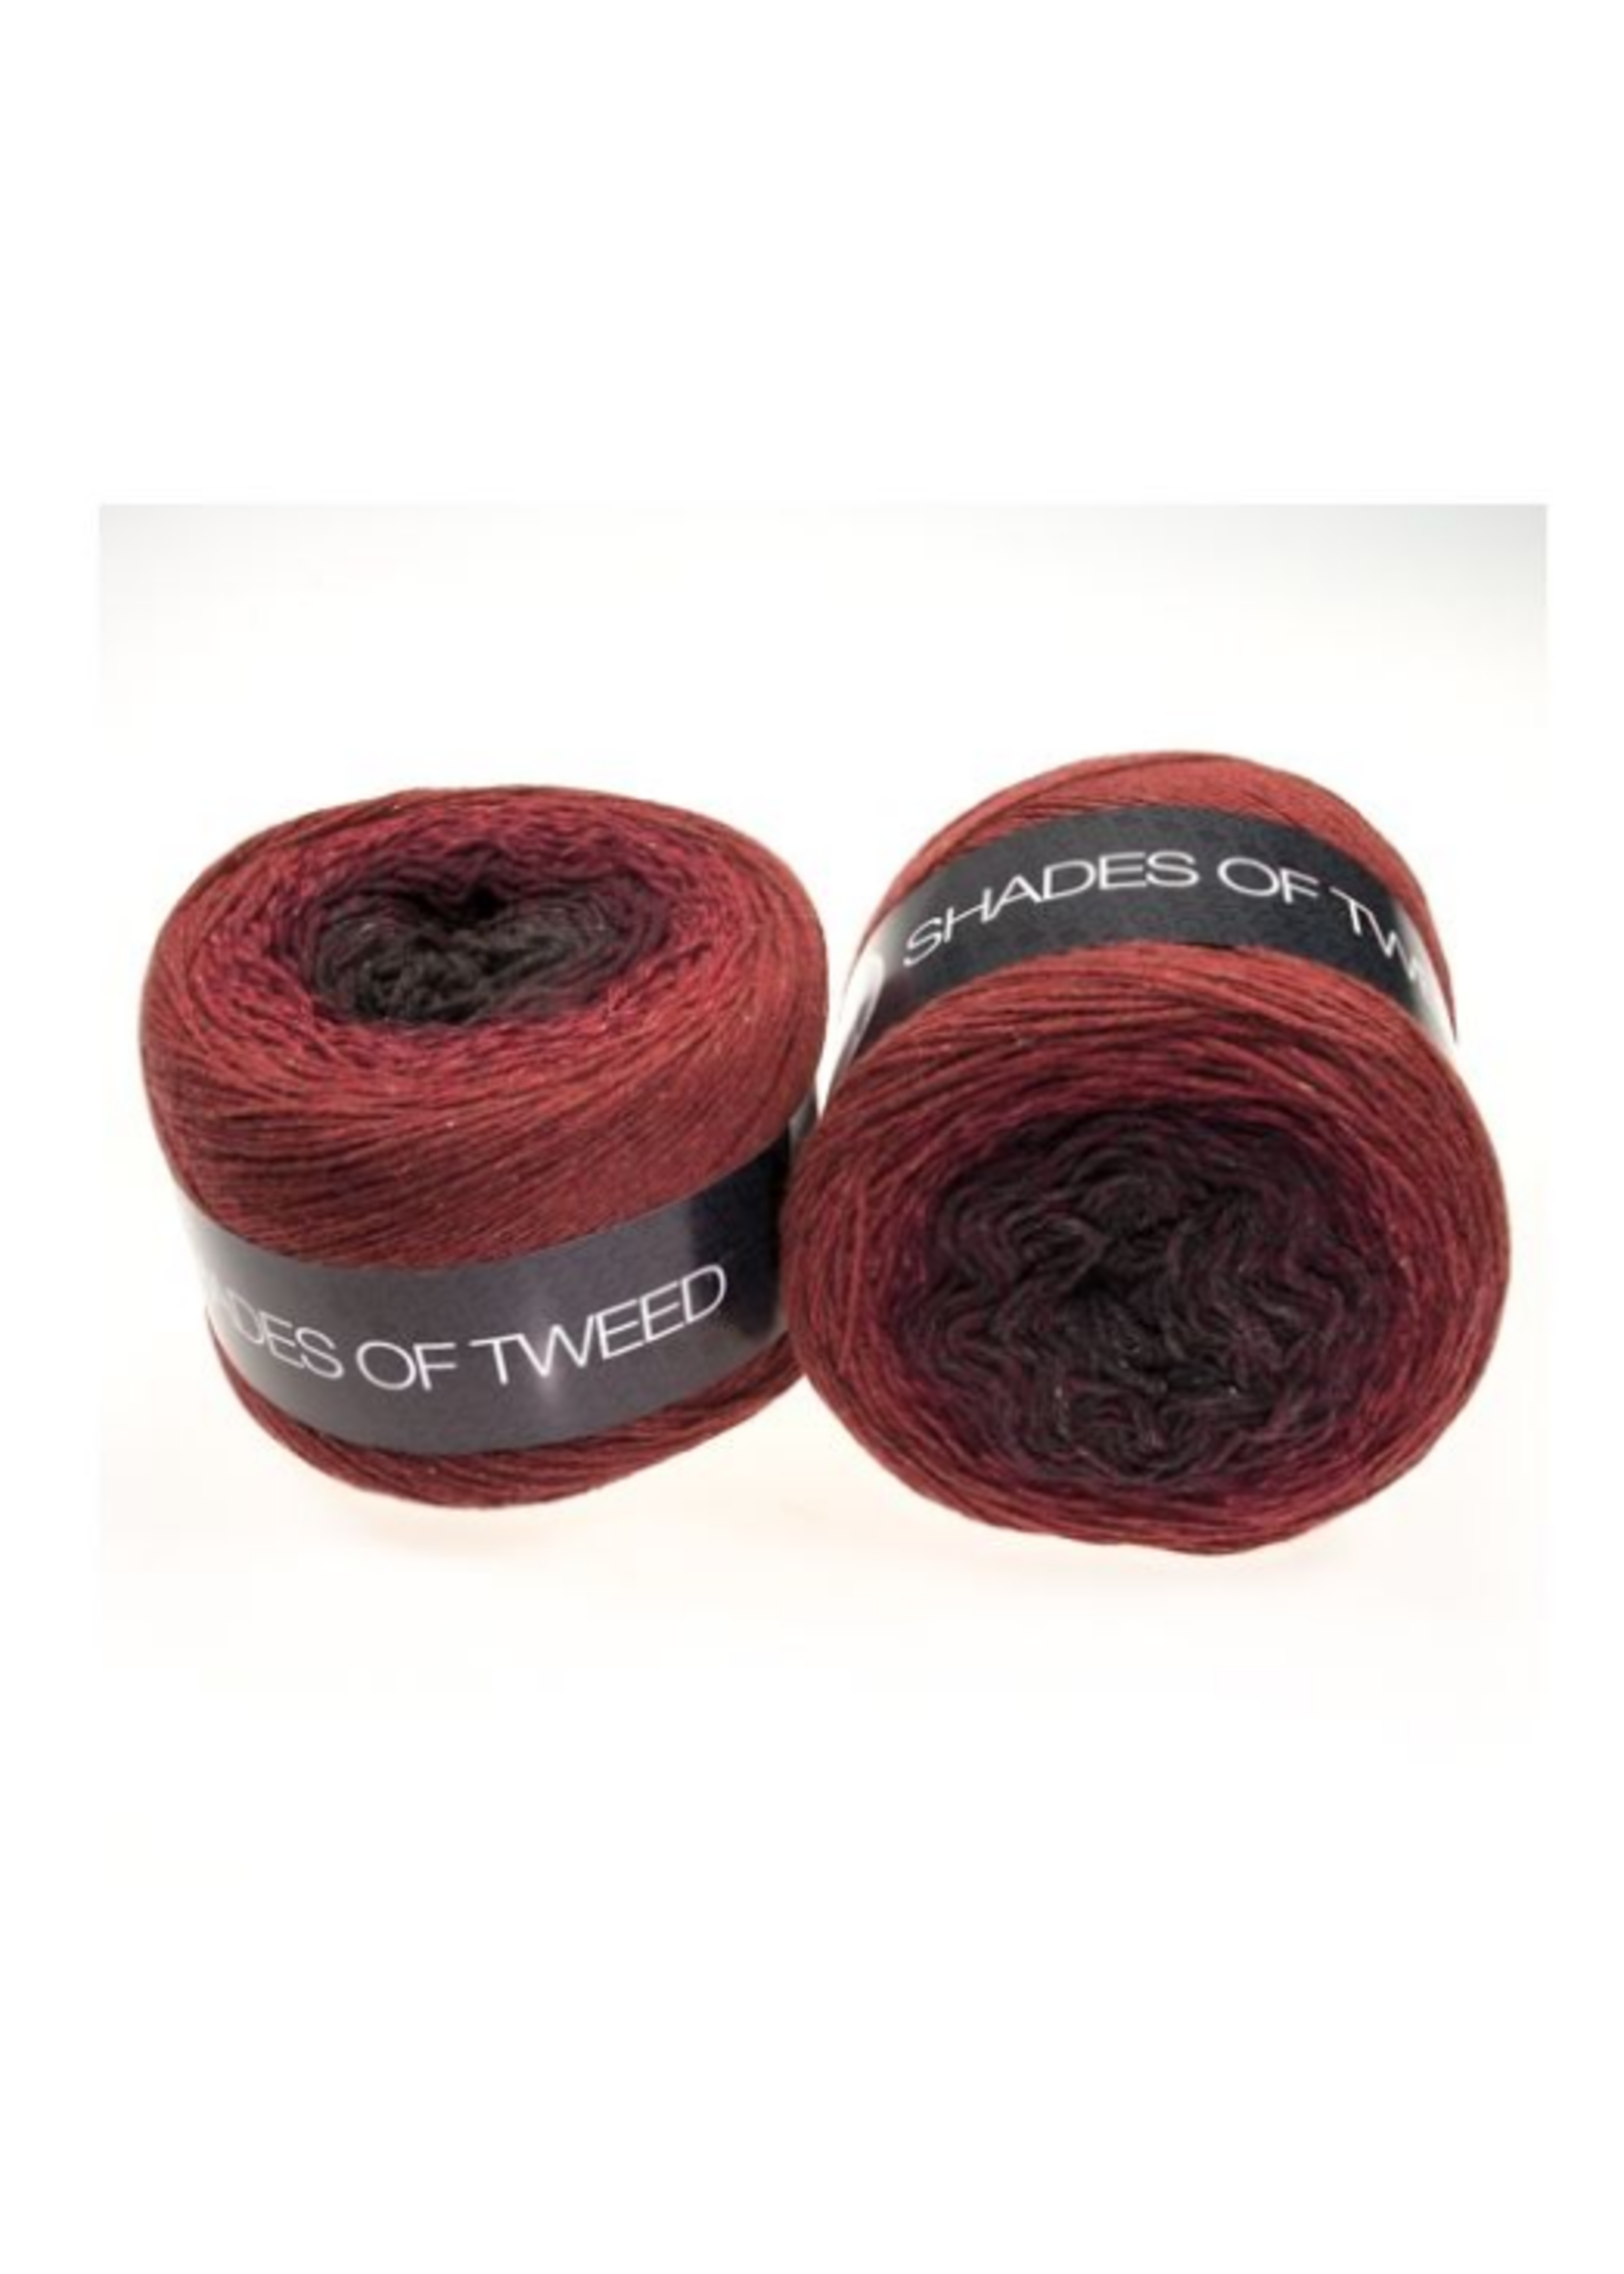 Lana Grossa Breipakket Shades of tweed